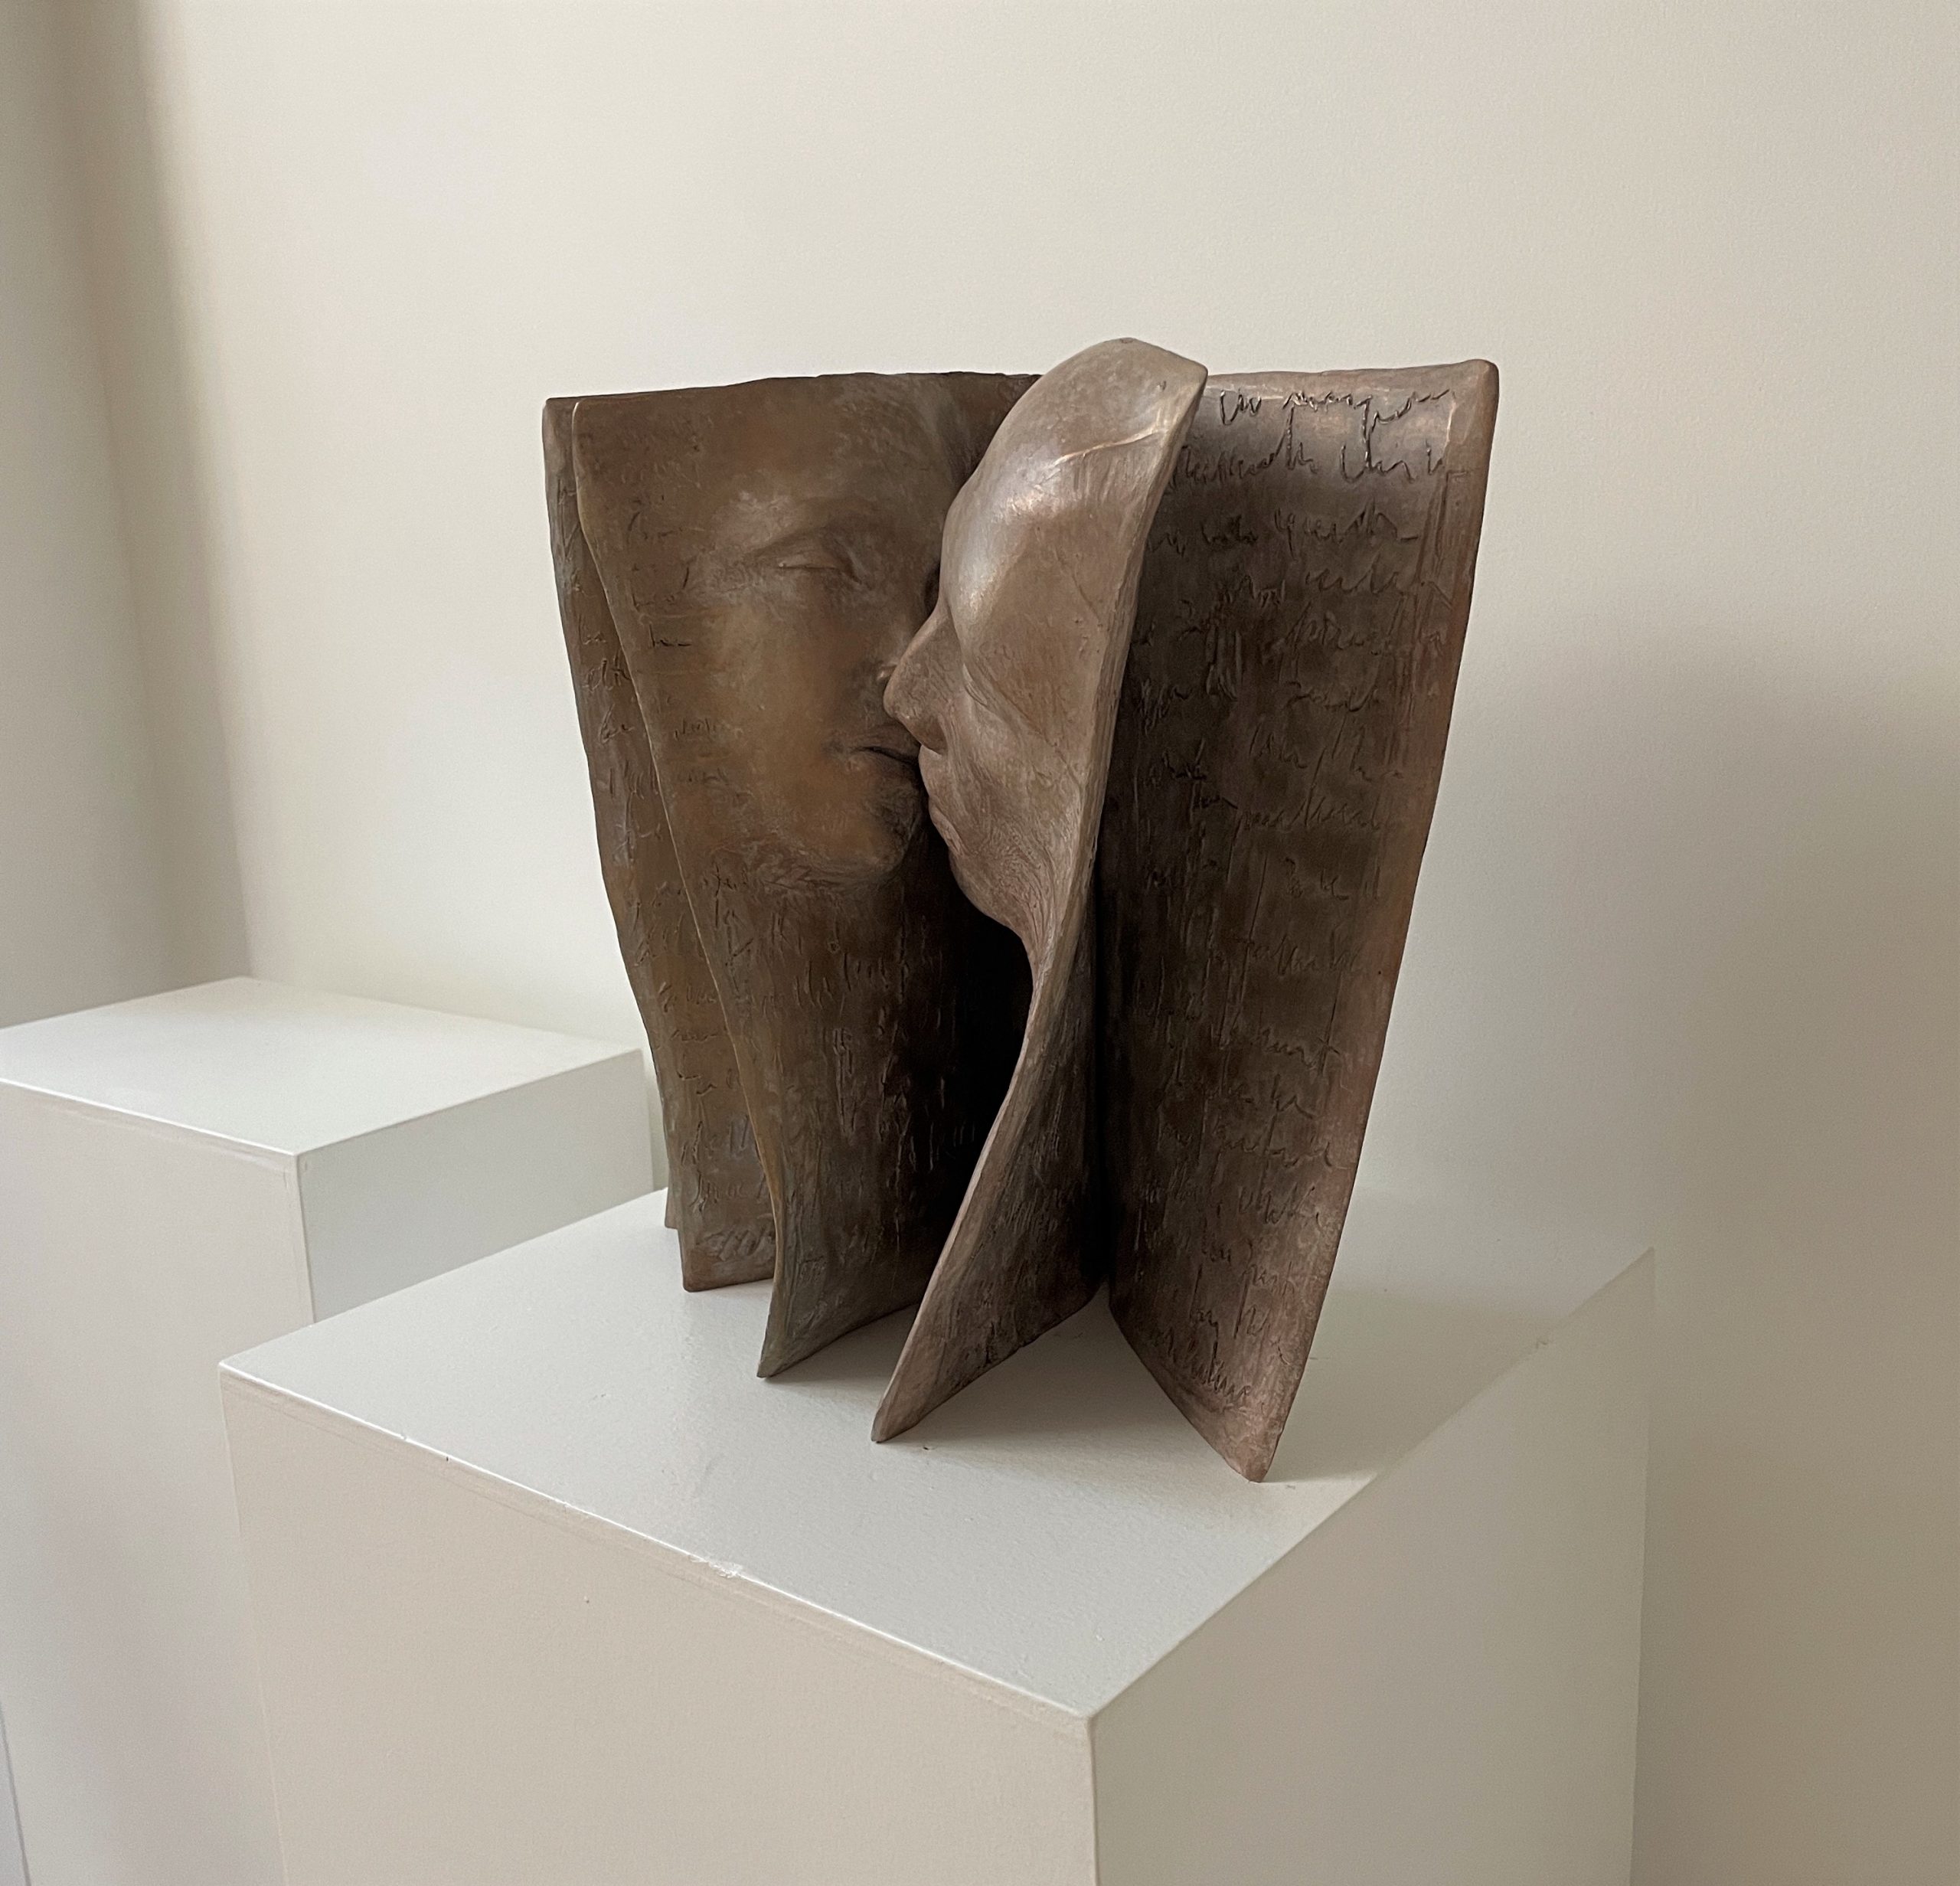 Kiss - Paola Grizi - sculpture bronze - © Casart